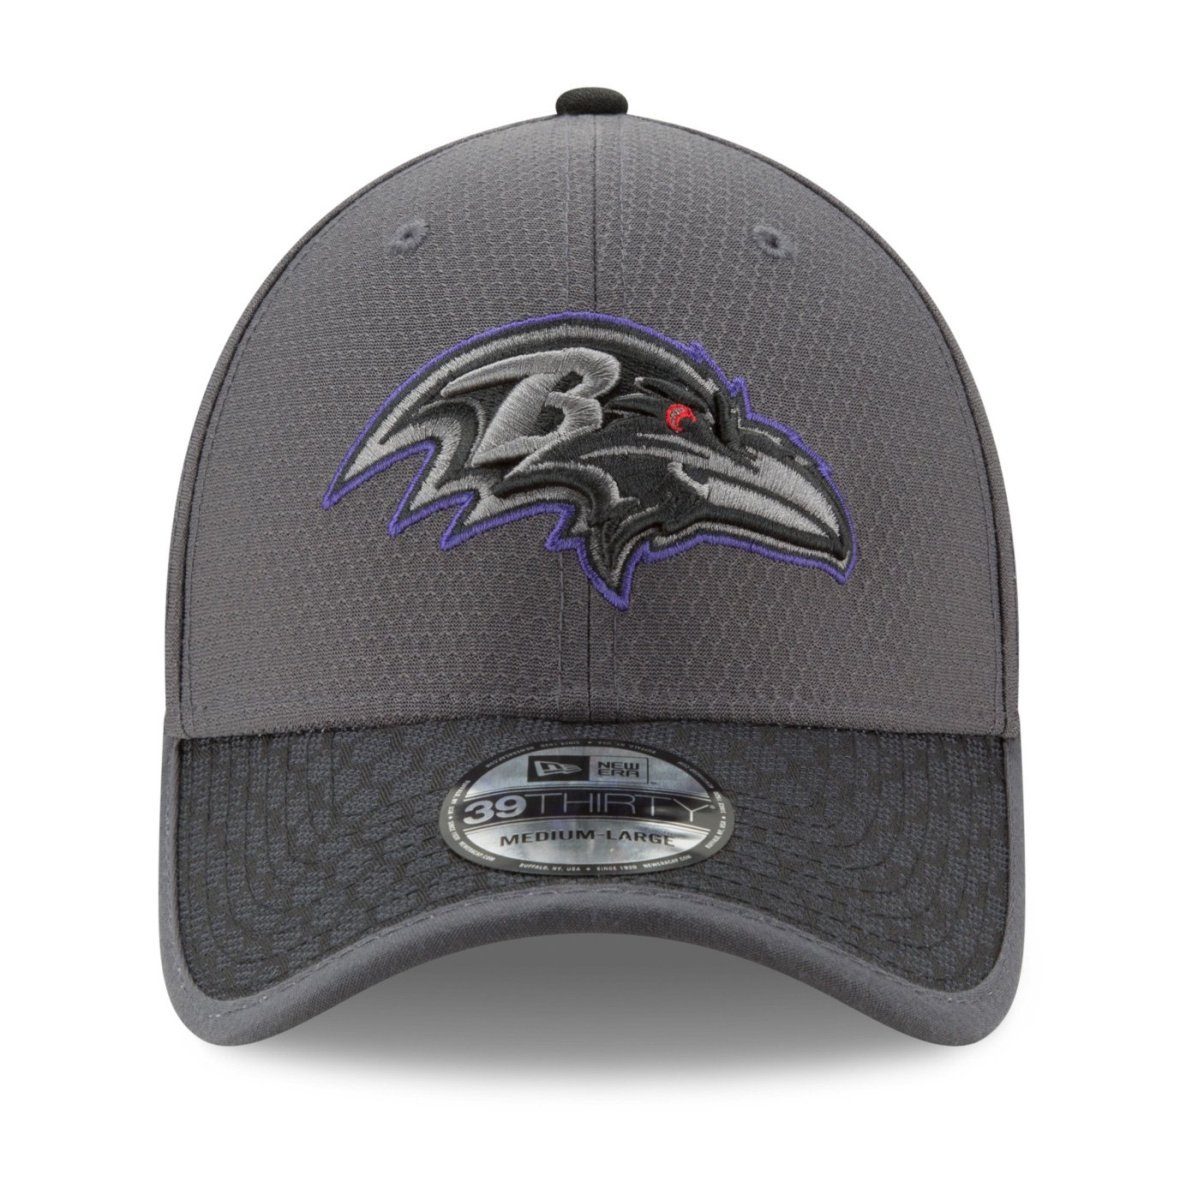 New Era NFL 39Thirty Ravens SIDELINE Flex Cap Baltimore